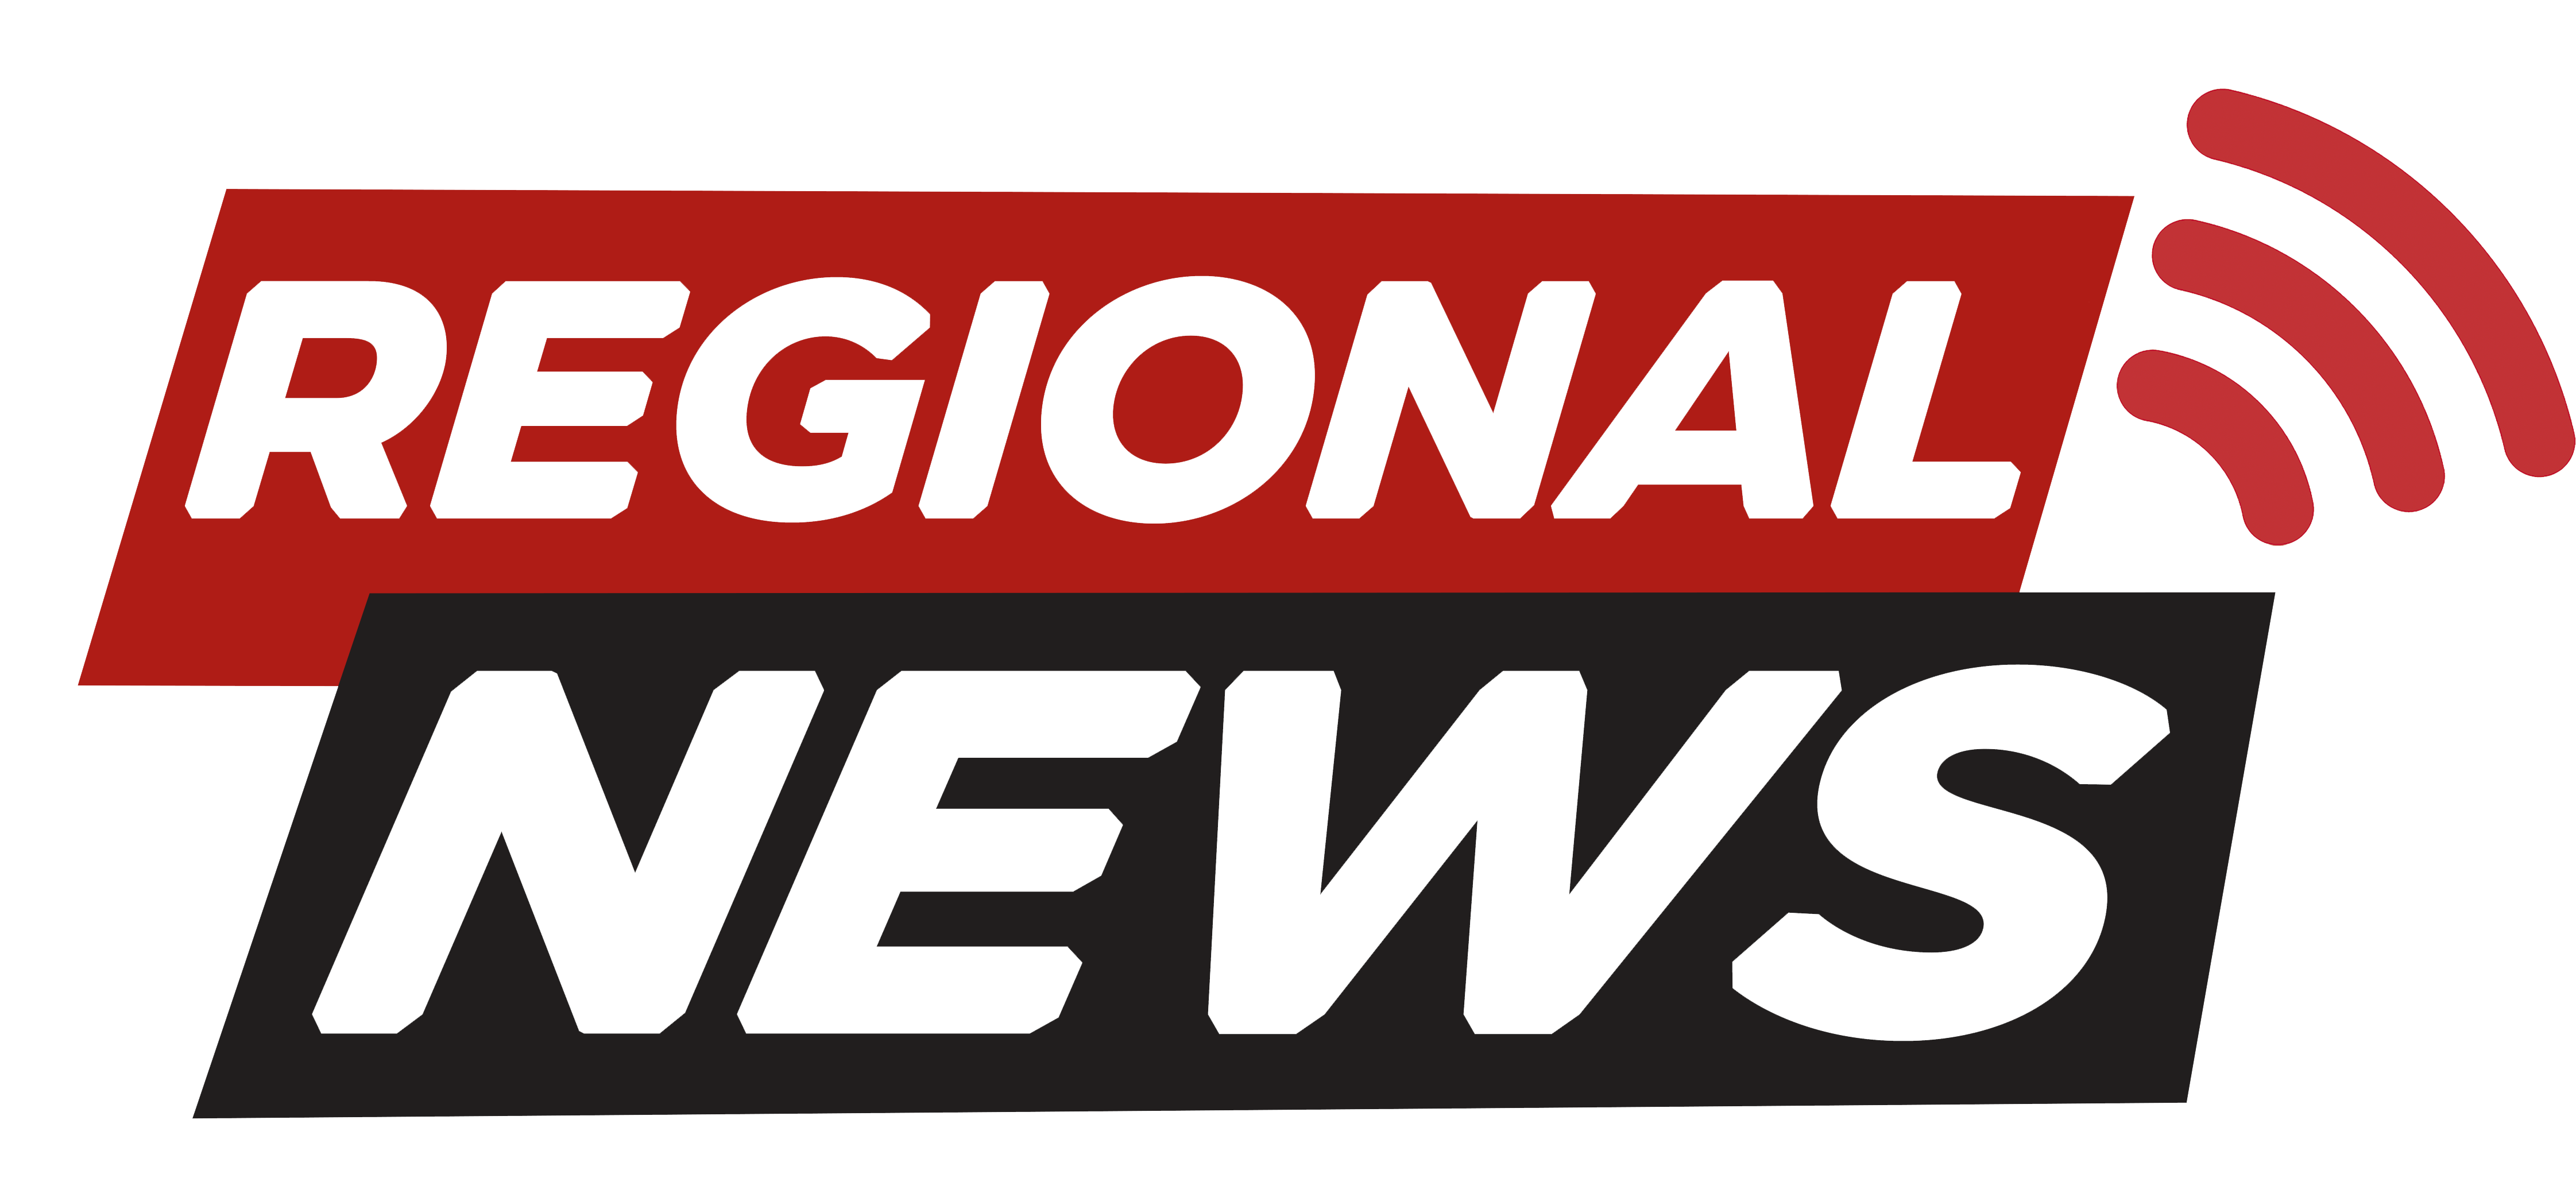 Regional News Limeira